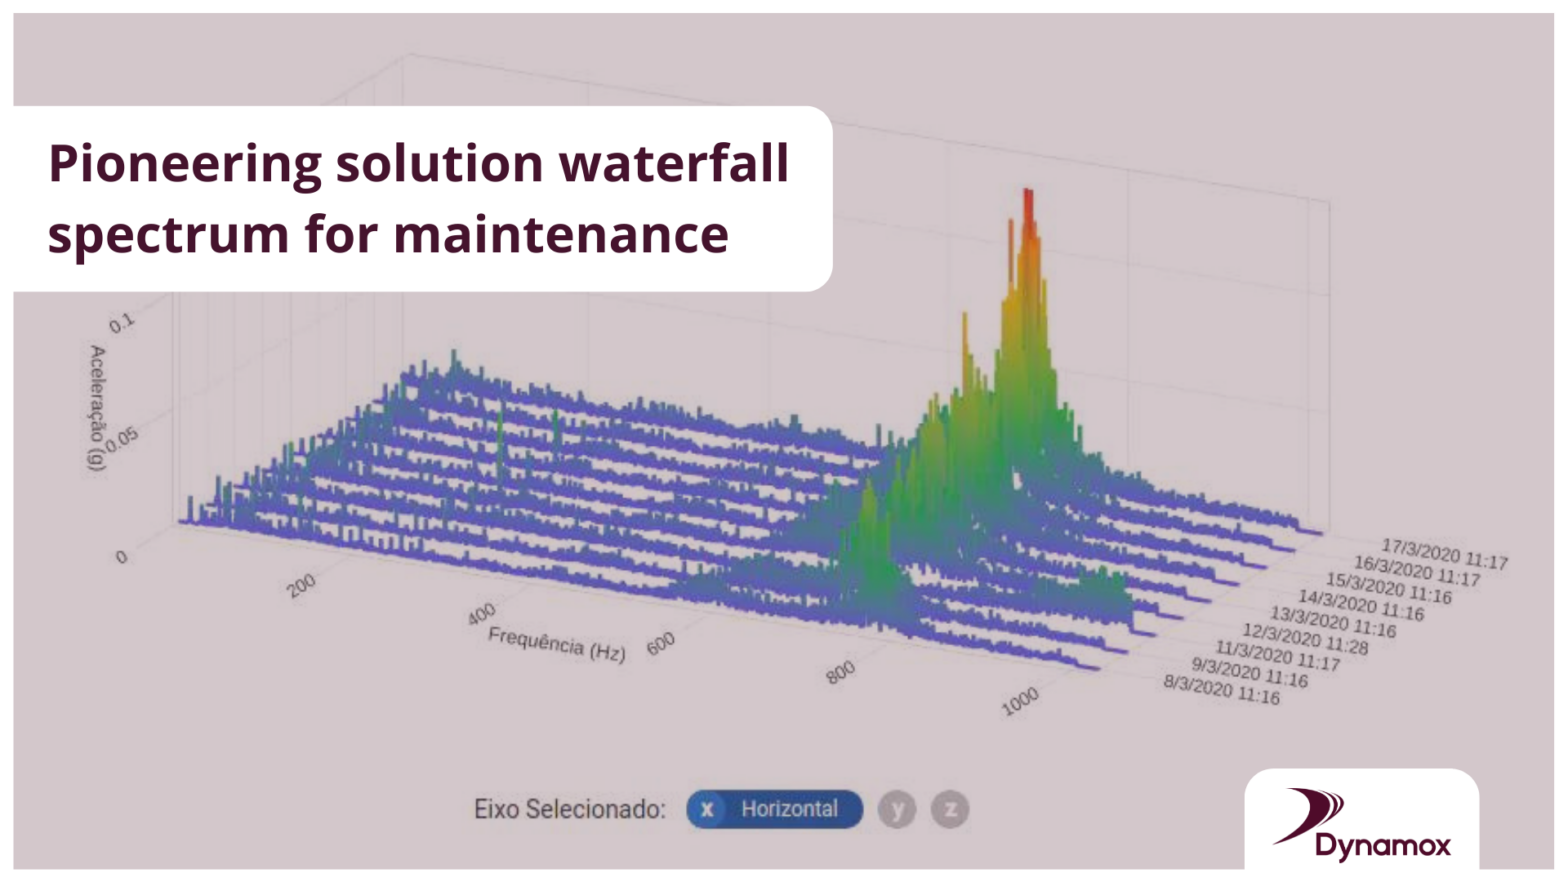 Pioneering solution waterfall spectrum for maintenance